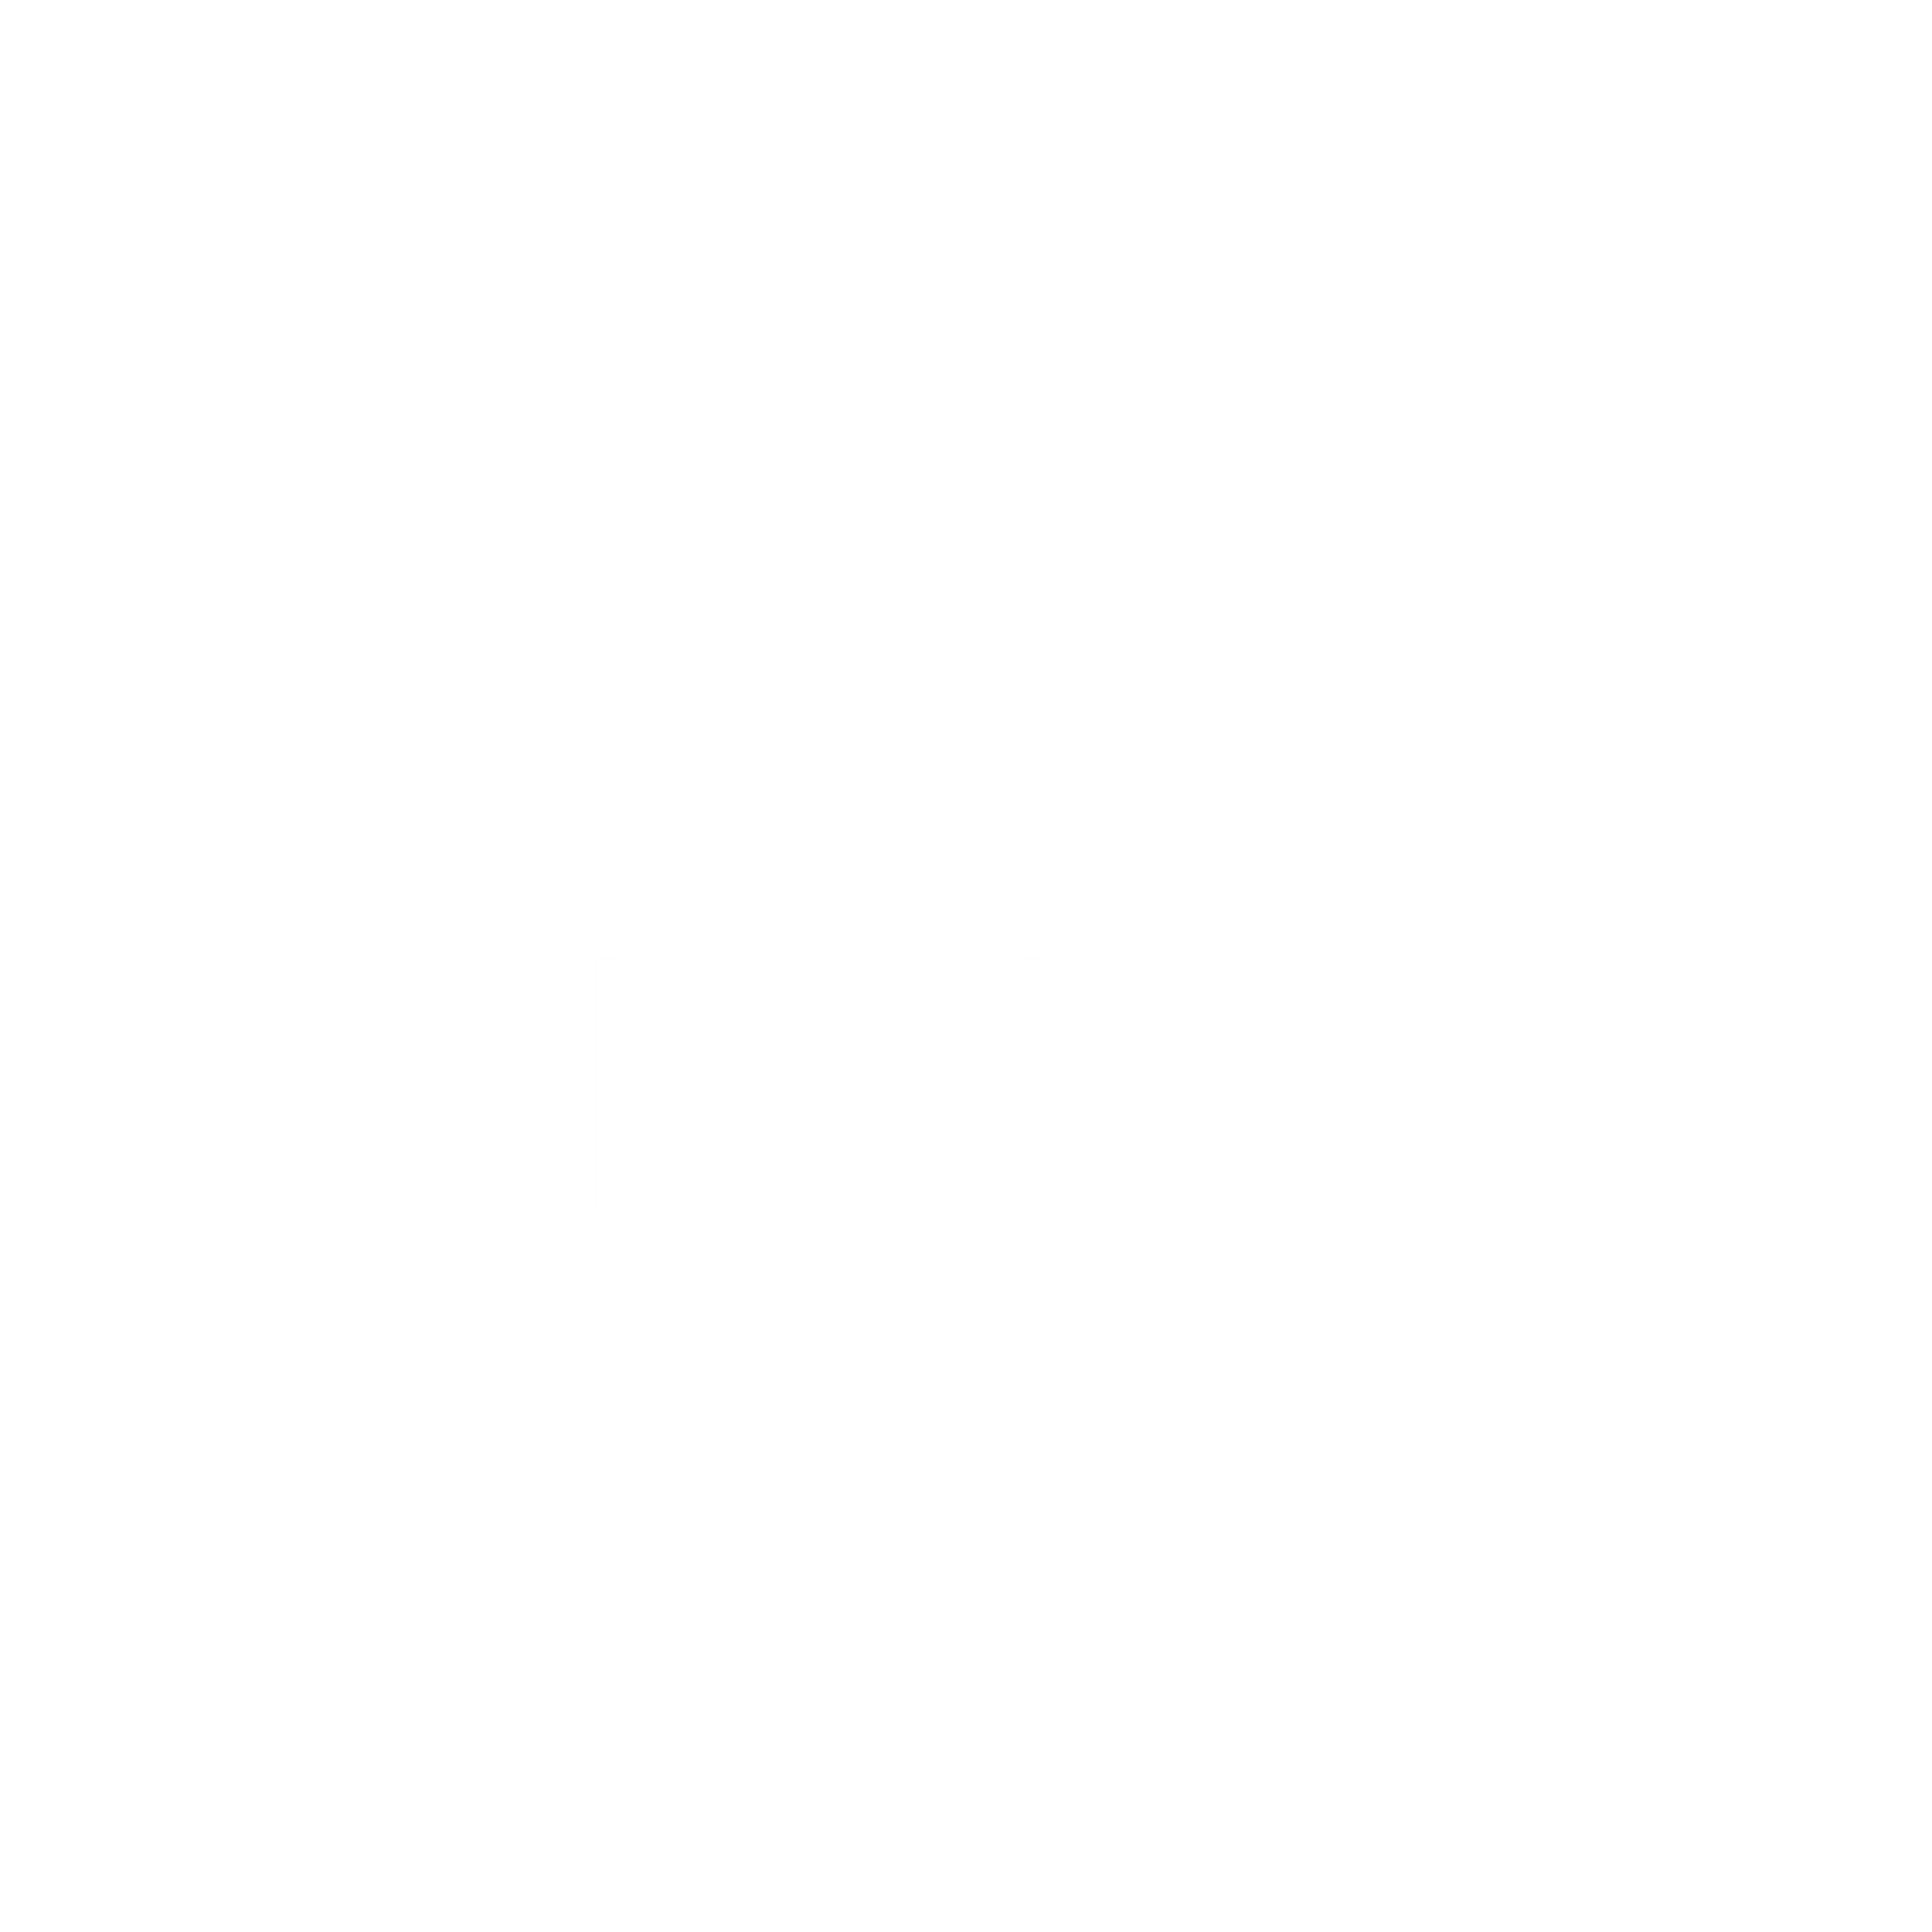 Holland pulselight